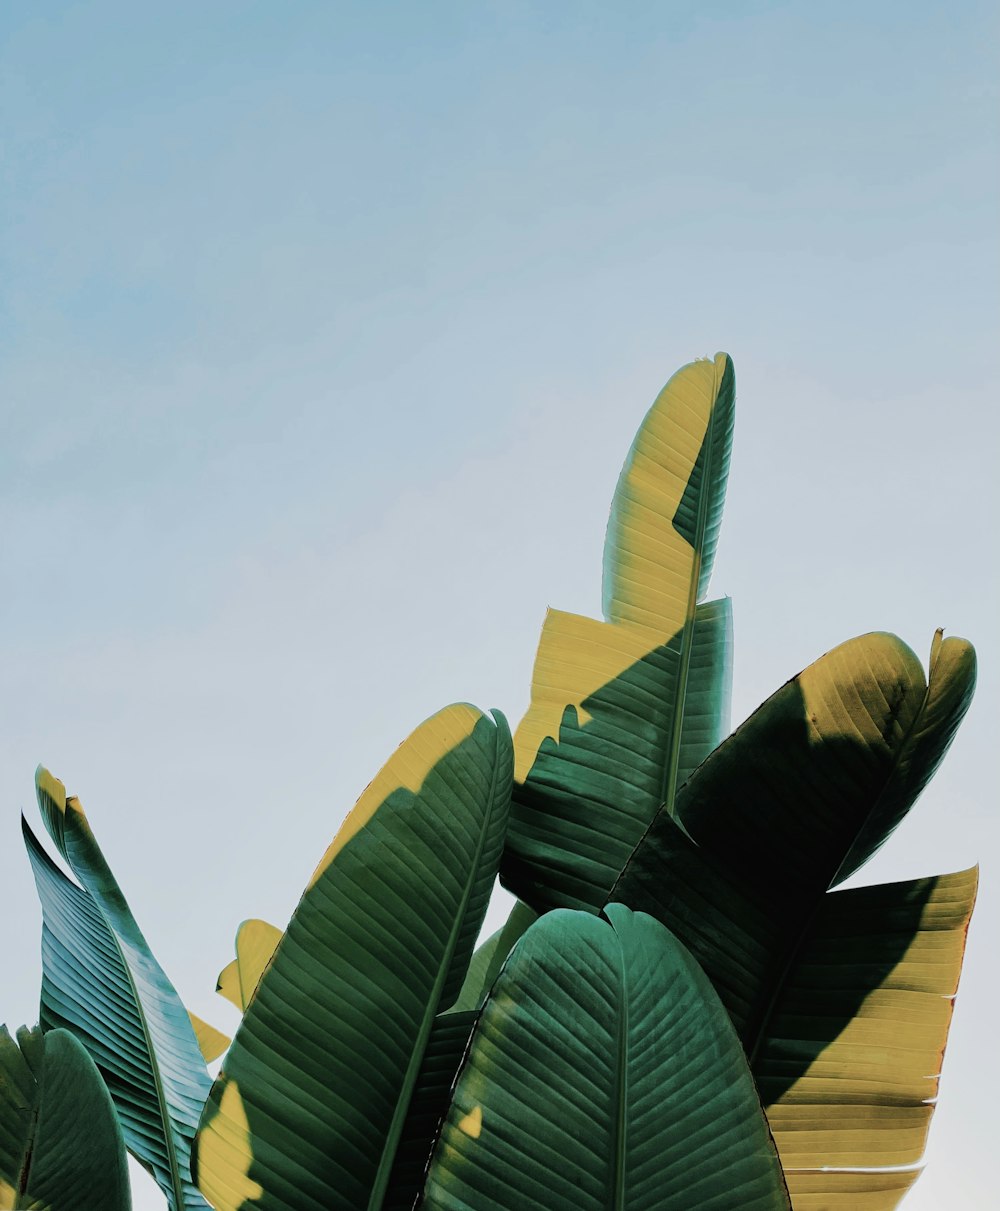 green banana leaves under blue sky during daytime